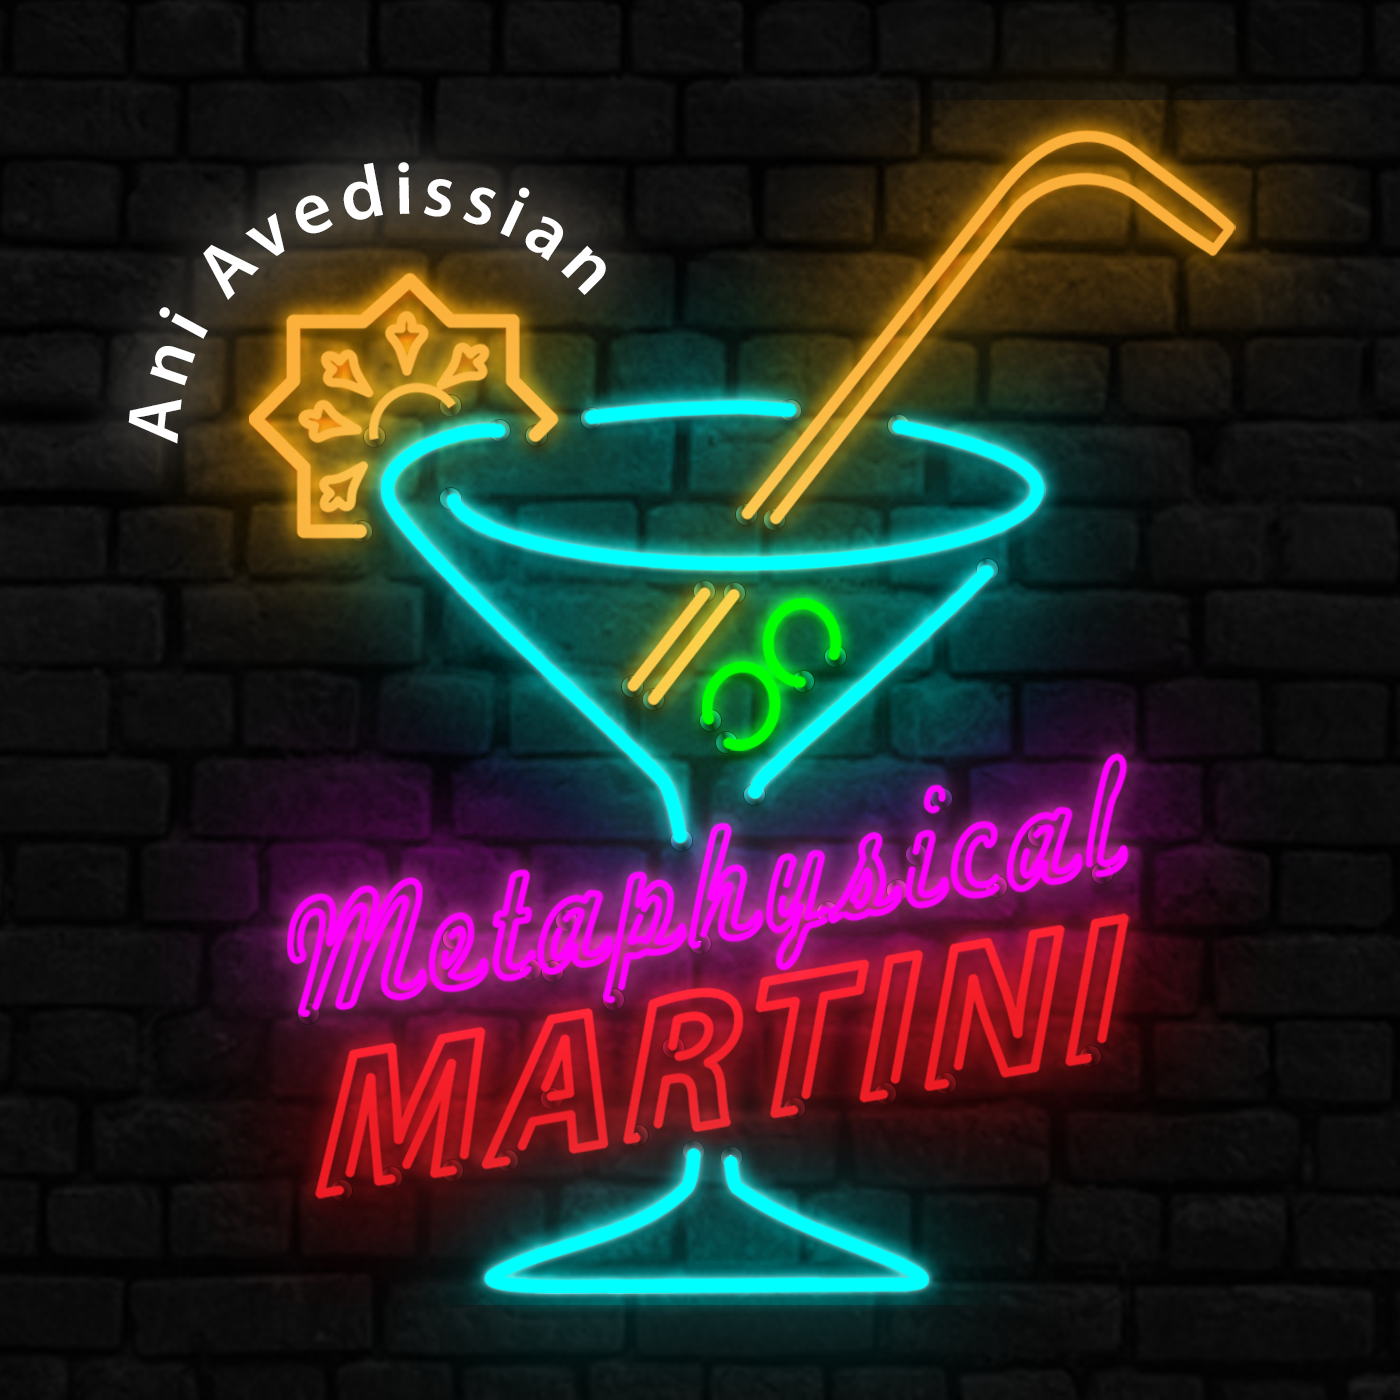 "Metaphysical Martini" 03/27/2024 - The Longest, Saddest "I Told You So"